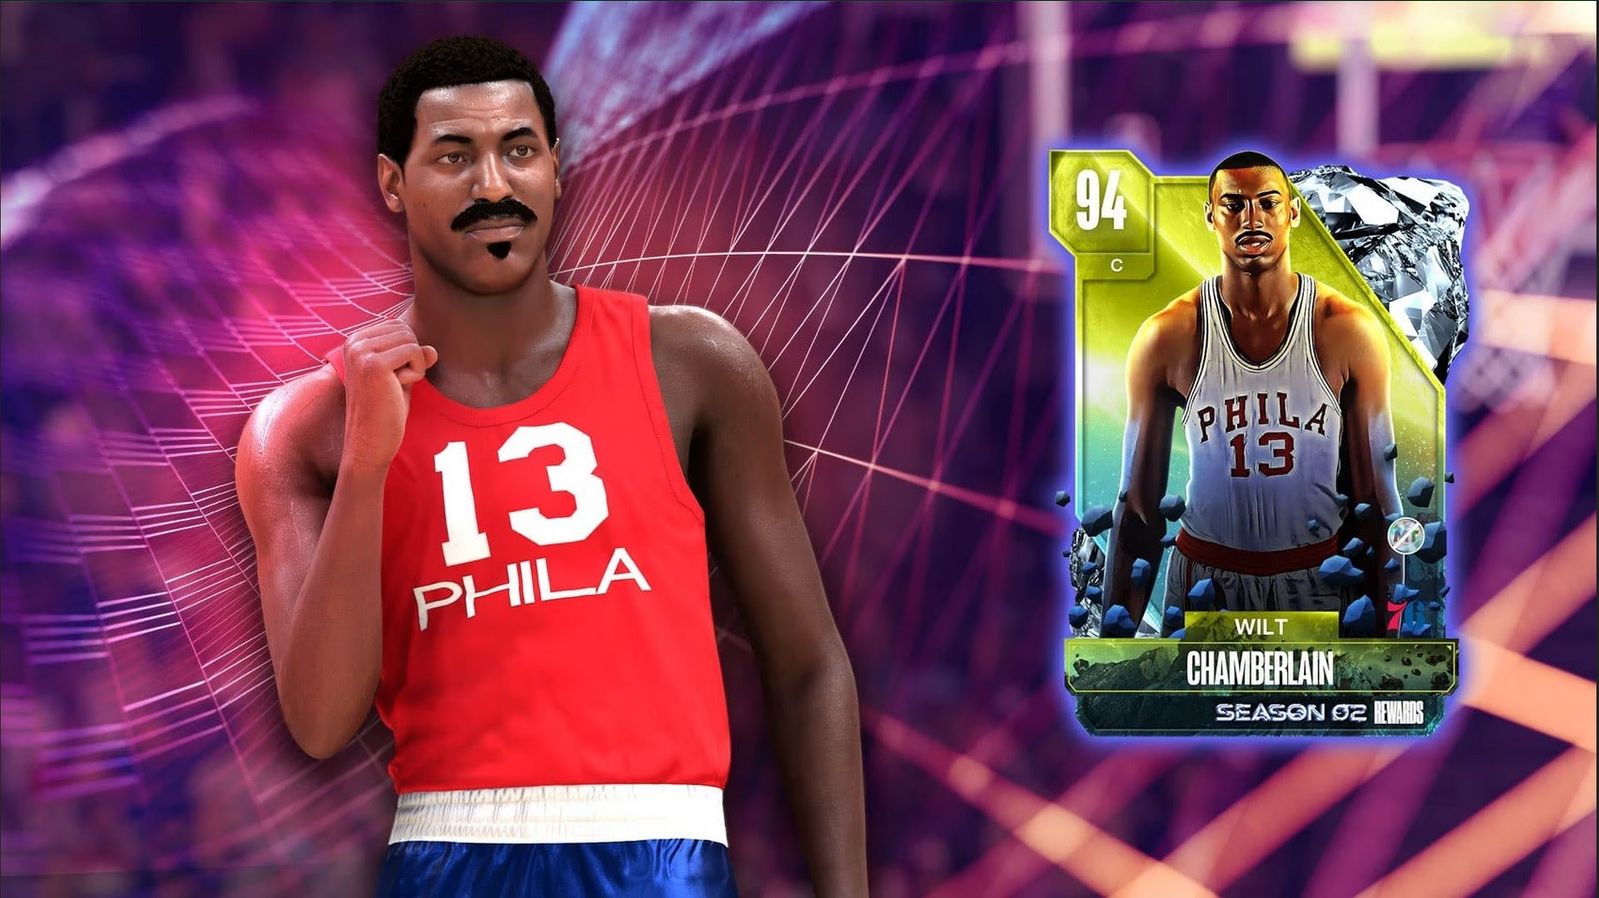 Wilt Chamberlain comes with a 94 OVR card in NBA 2K24 Season 2